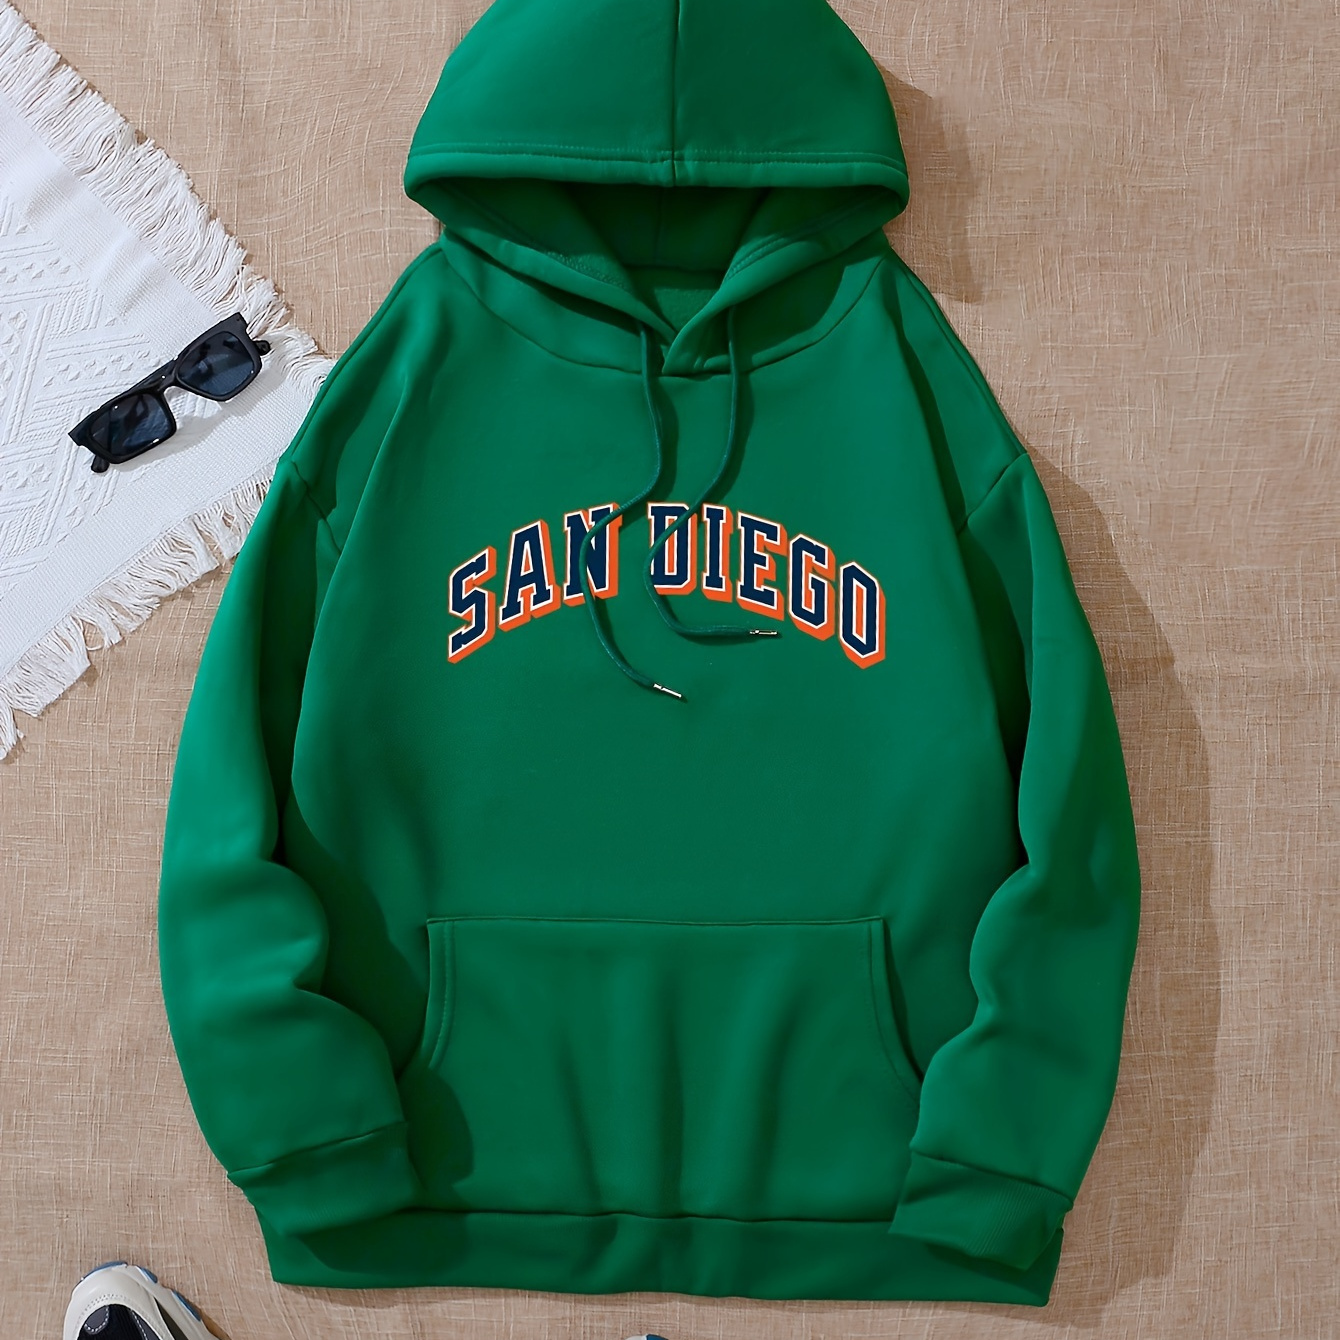 

San Diego Print Hoodie, Drawstring Casual Hooded Sweatshirt For Winter & Fall, Women's Clothing